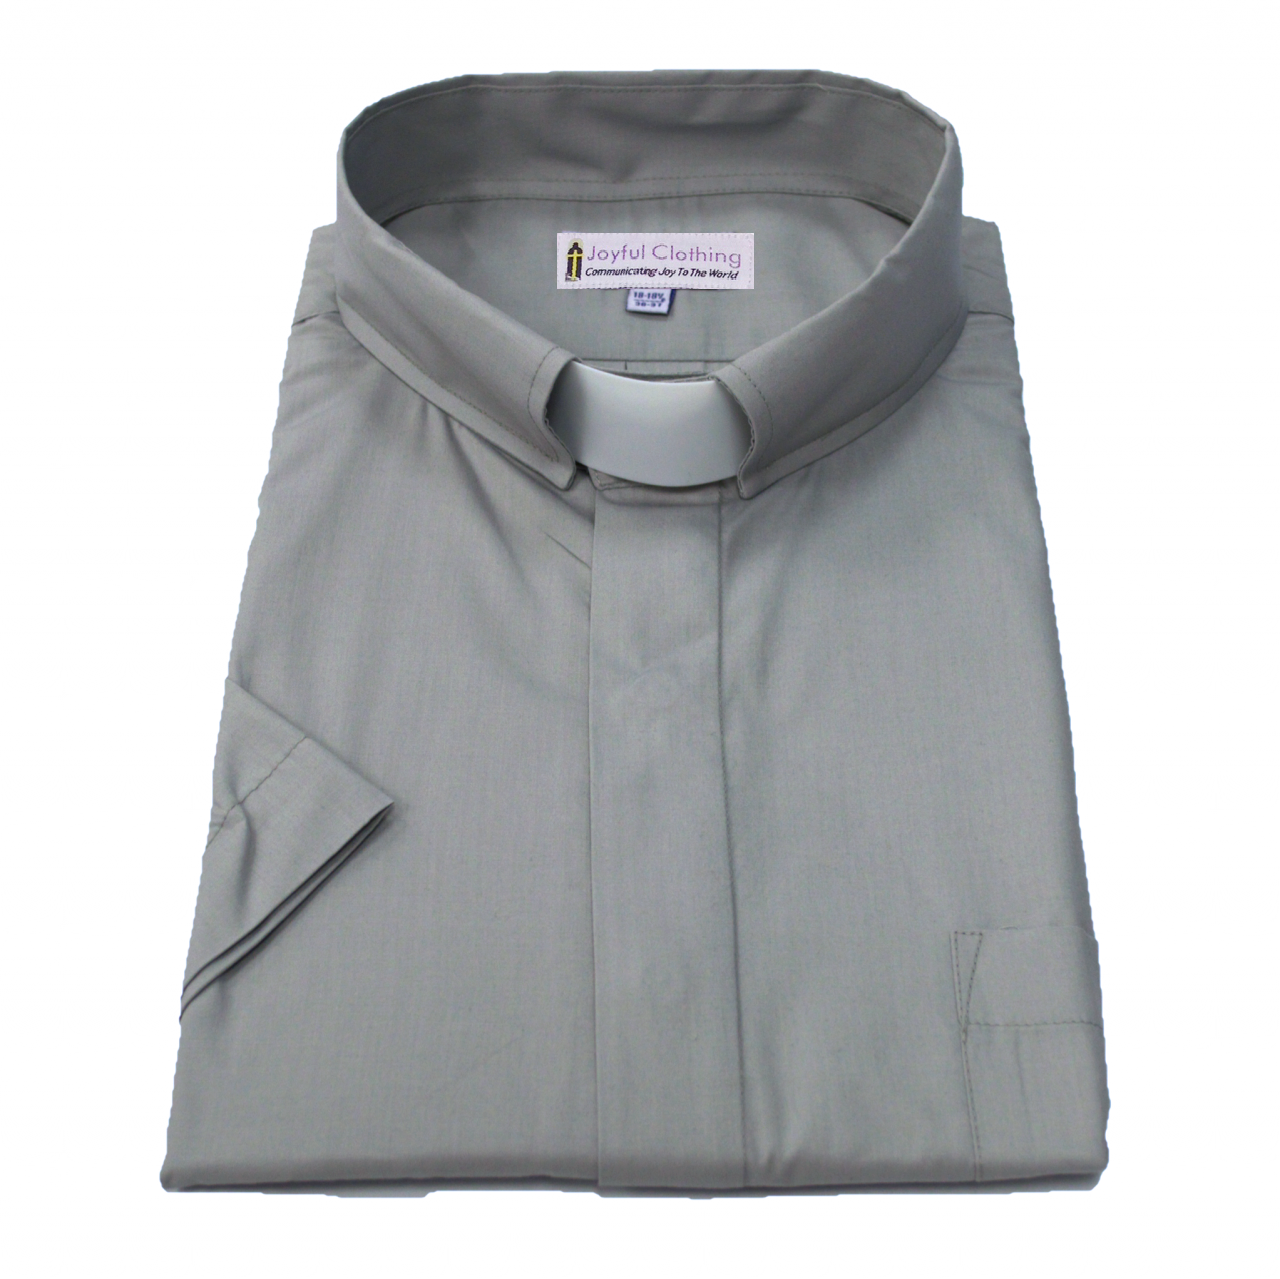 161. Men's Short-Sleeve Tab-Collar Clergy Shirt - Gray